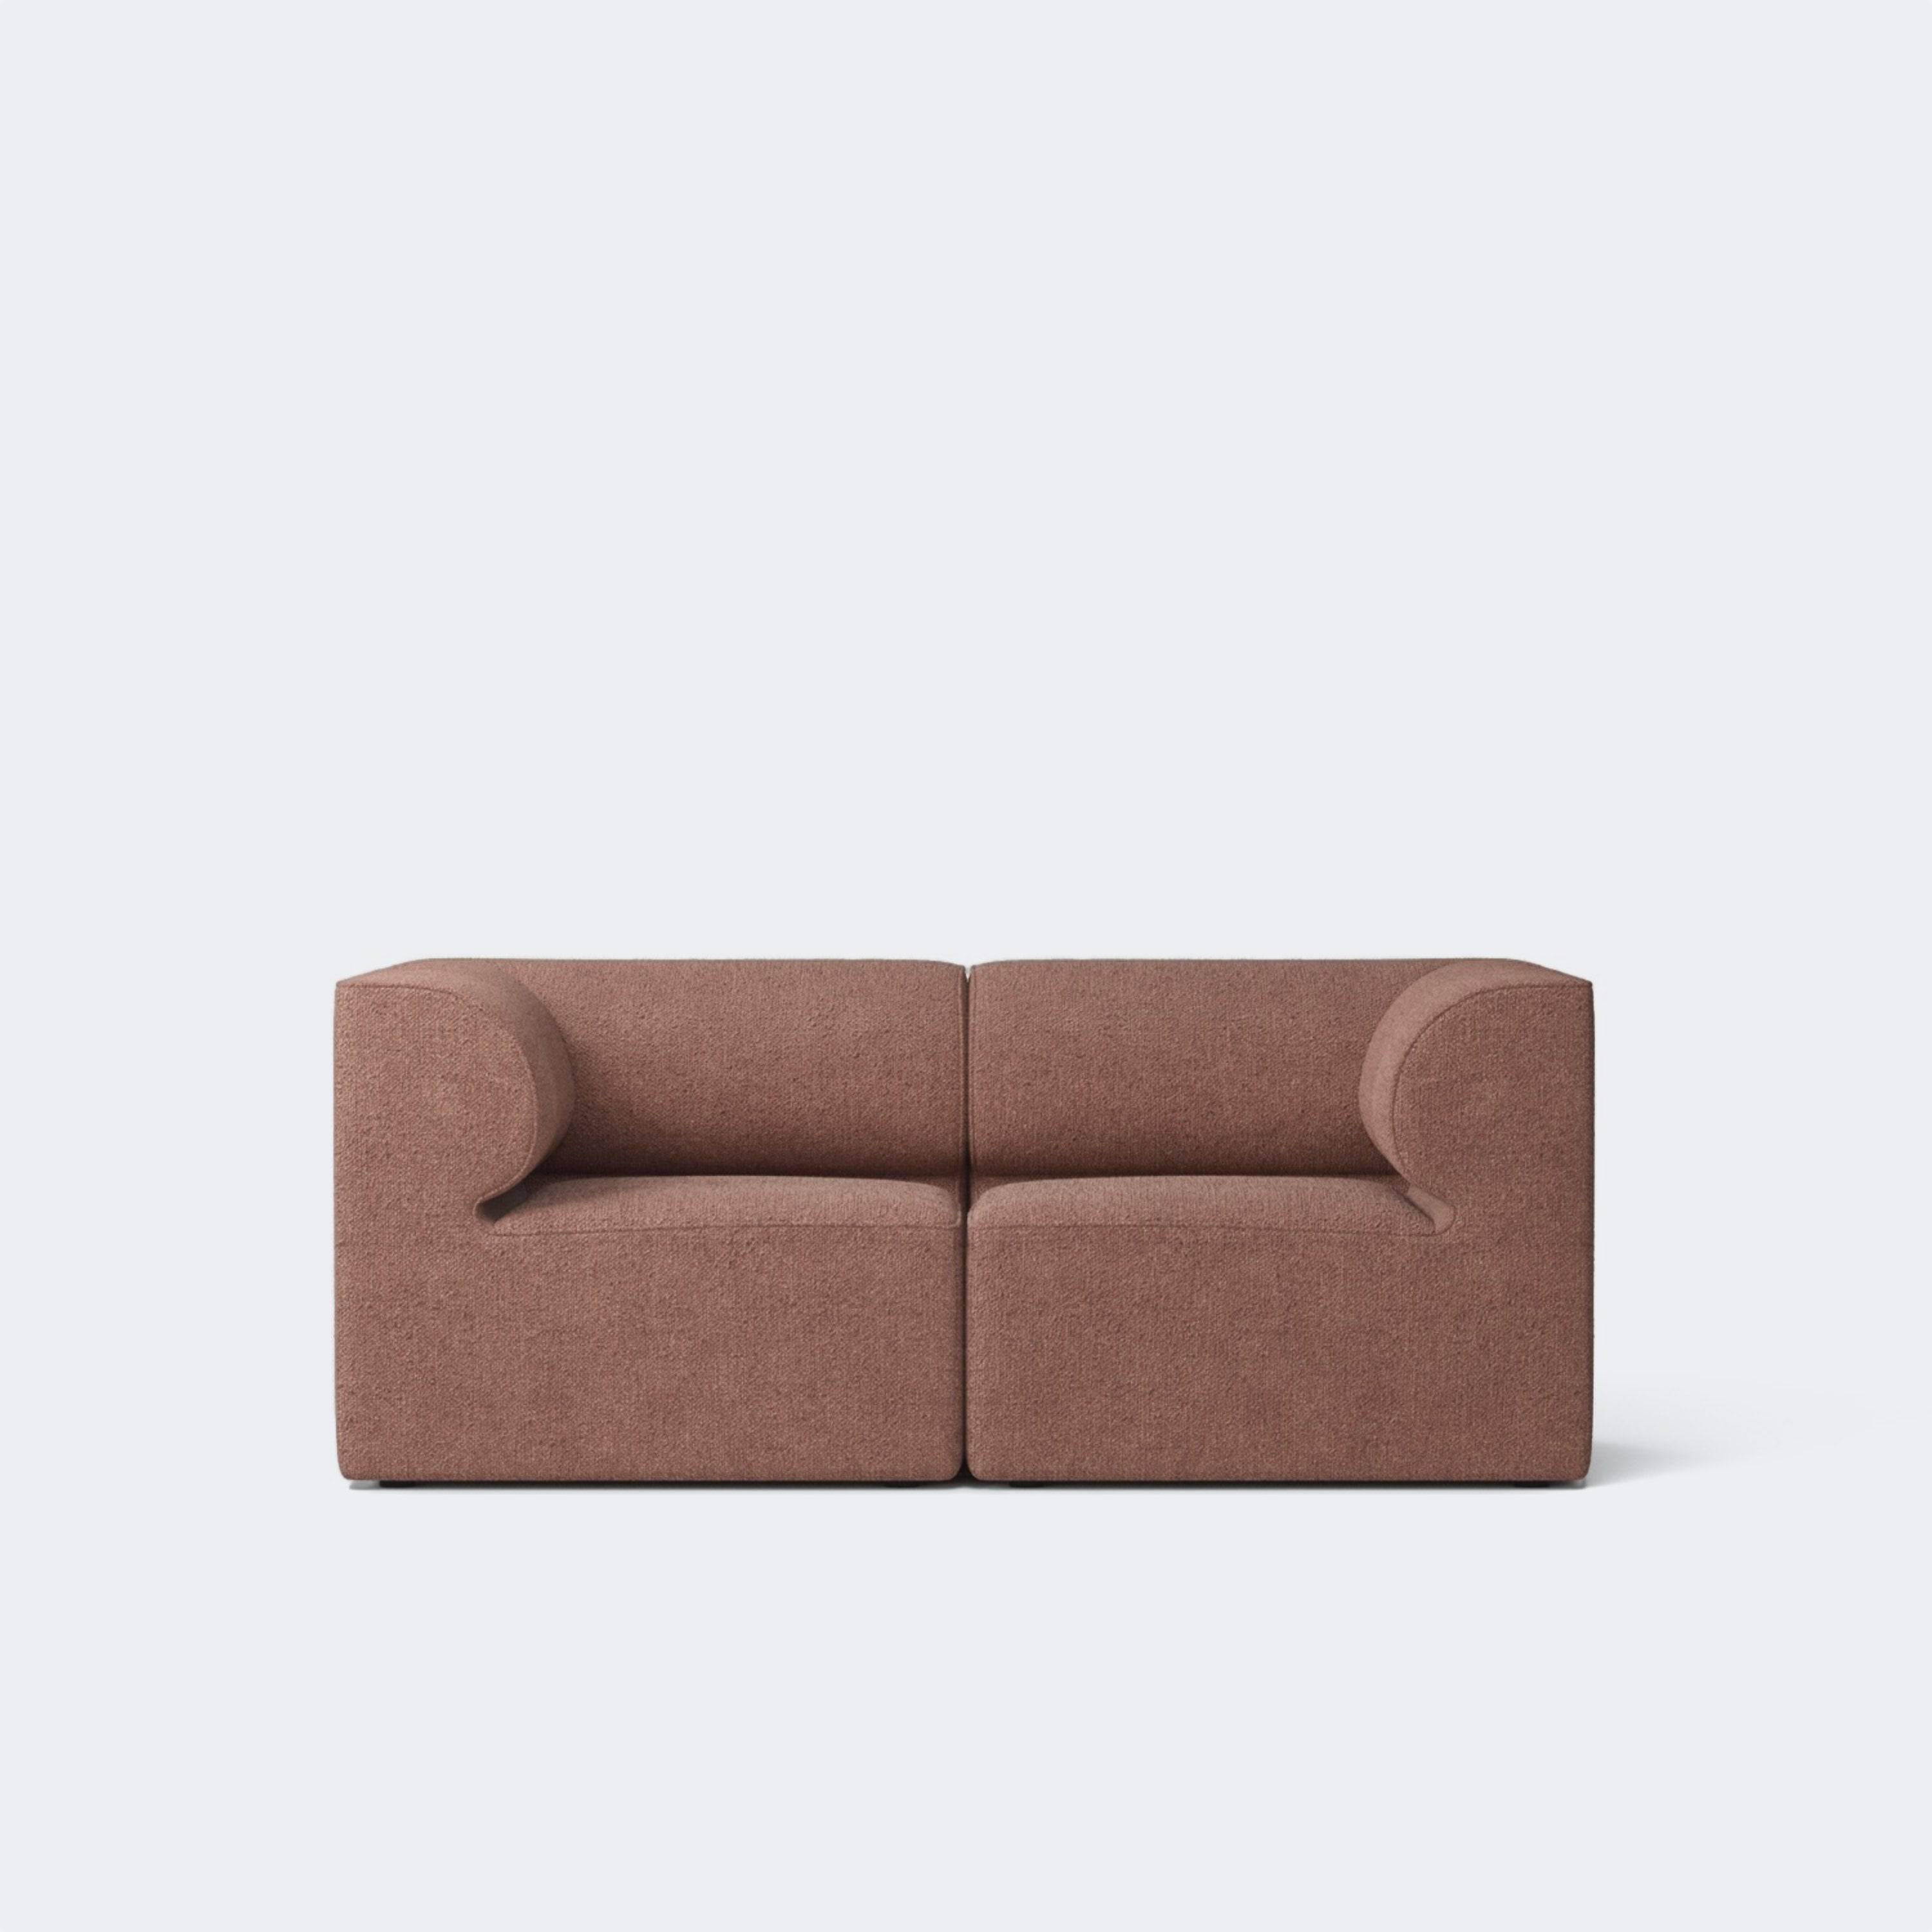 Audo Copenhagen Eave Sofa, 2-Seater Made To Order (10-12 Weeks) Boucle #08 (Bordeaux) - KANSO